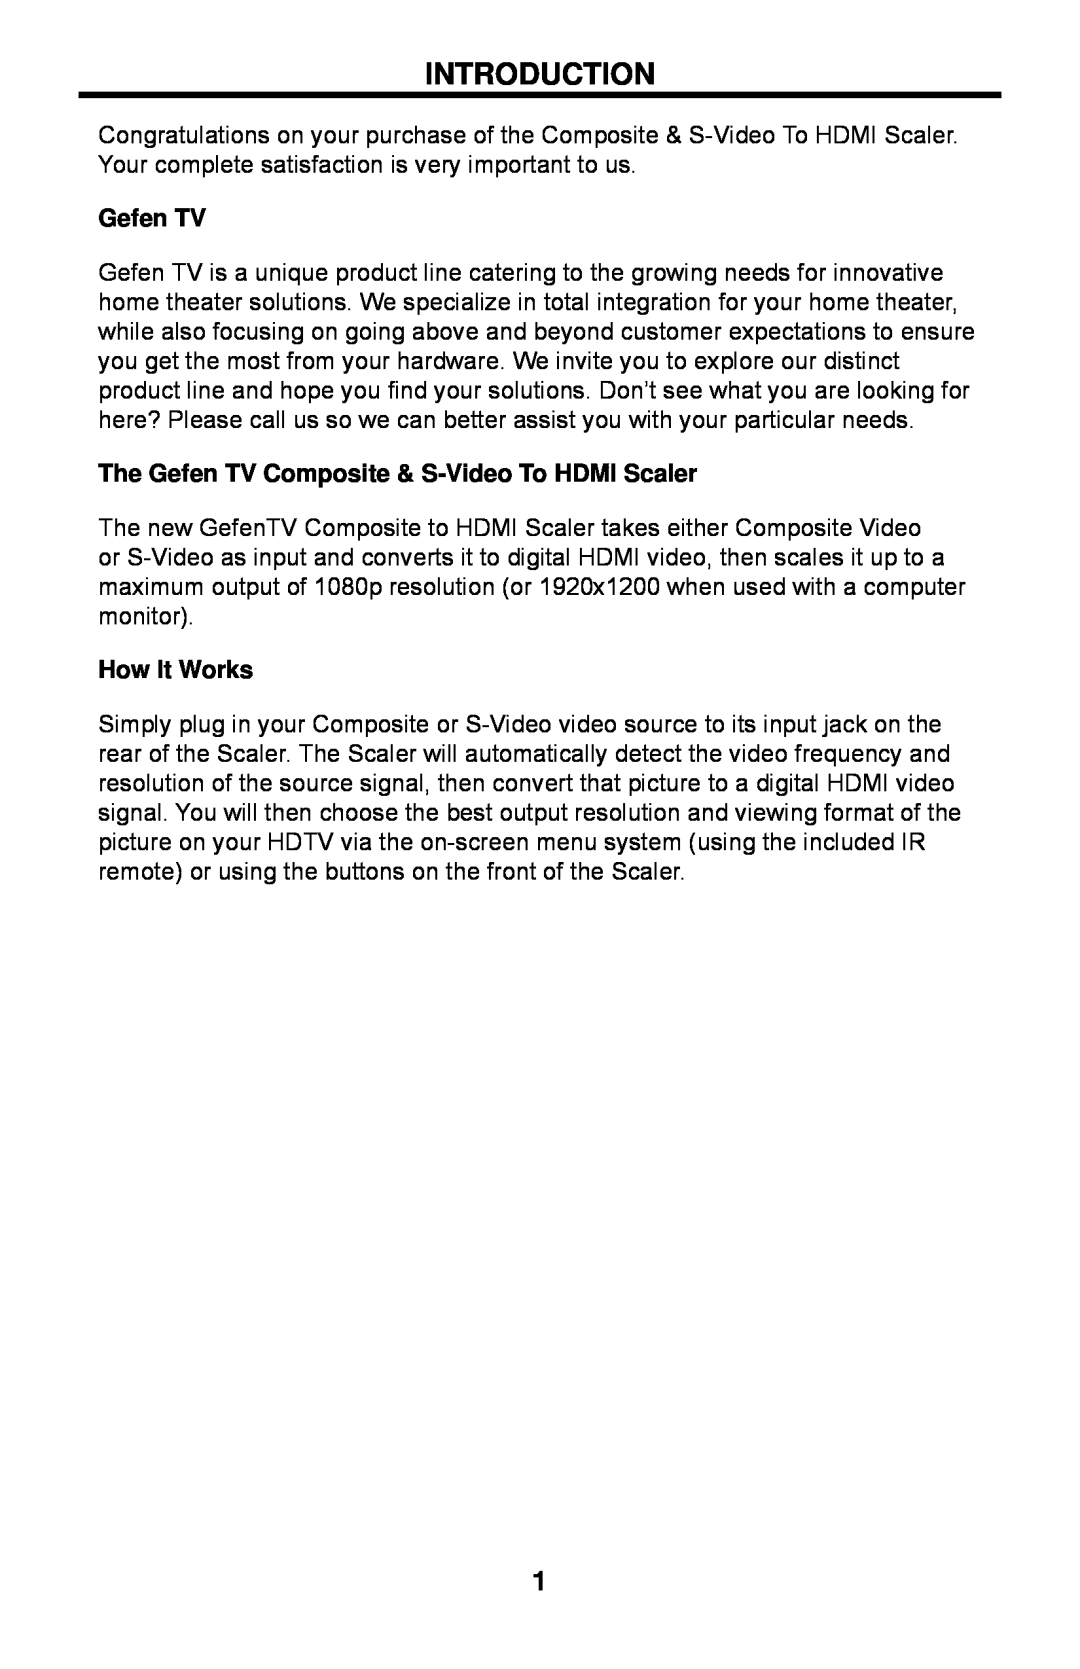 Gefen GTV-COMPSVID-2-HDMIS user manual Introduction, The Gefen TV Composite & S-VideoTo HDMI Scaler, How It Works 